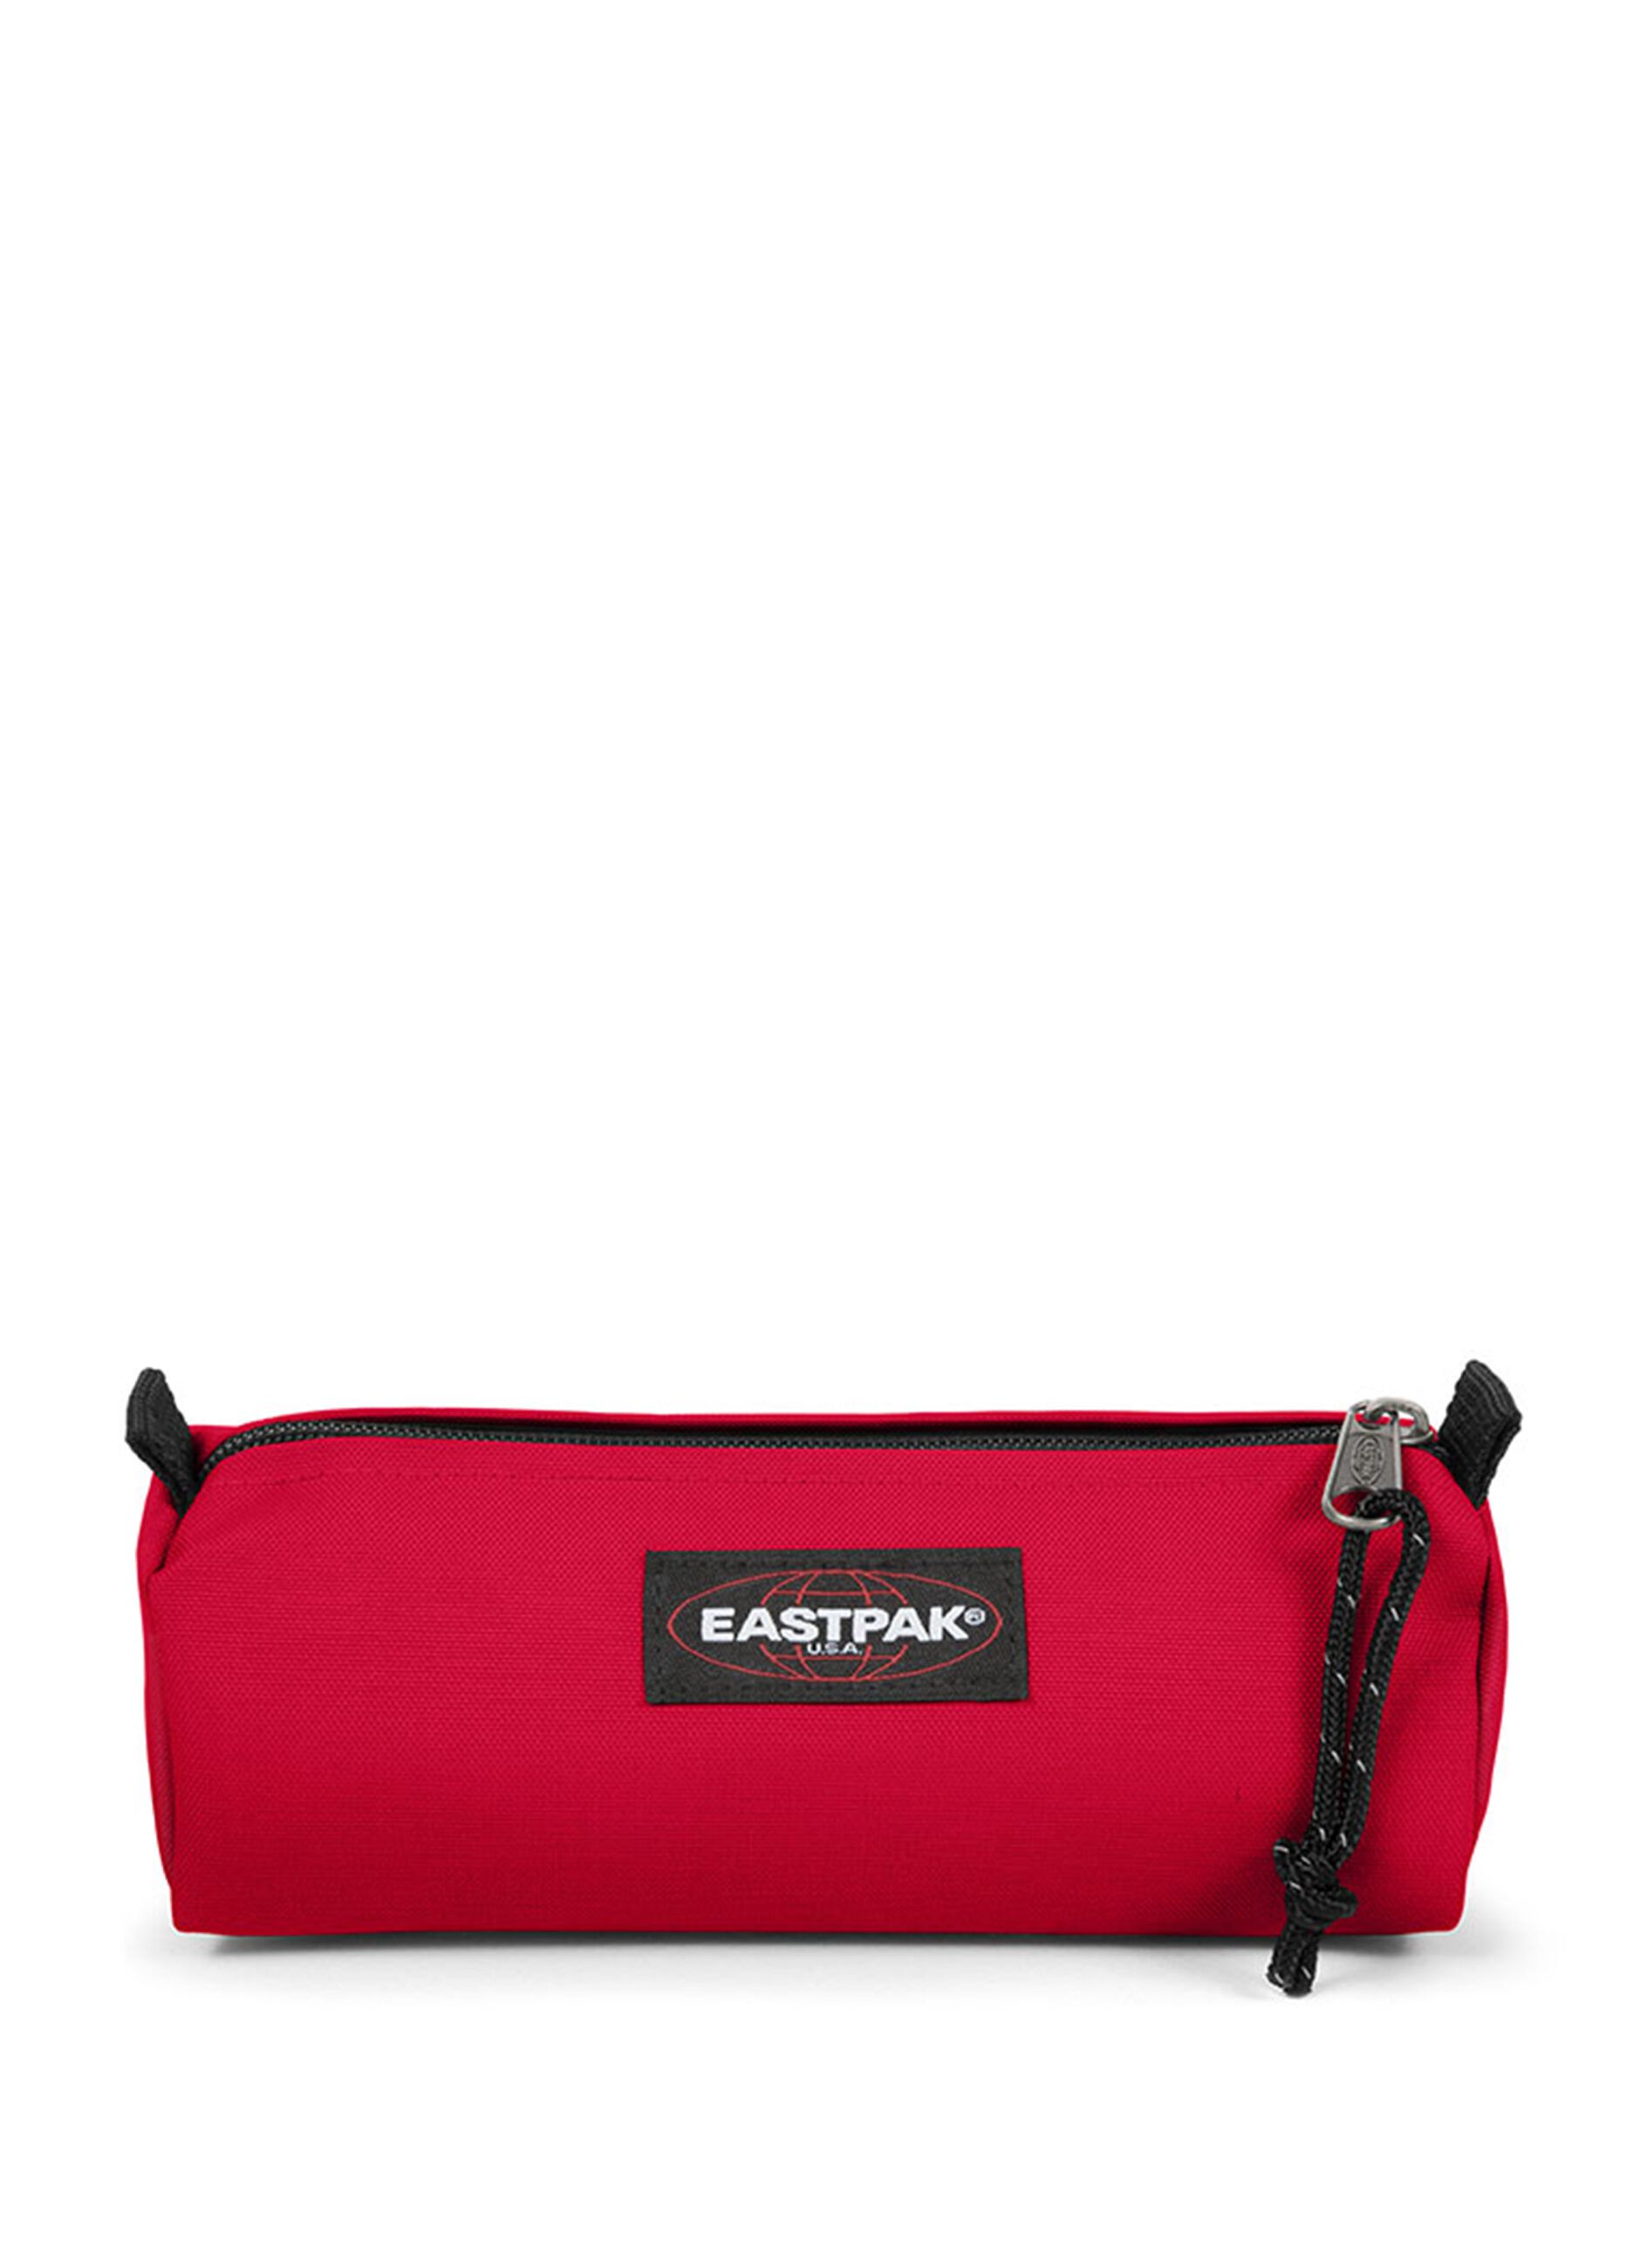 Eastpak Benchmark Single pencil case